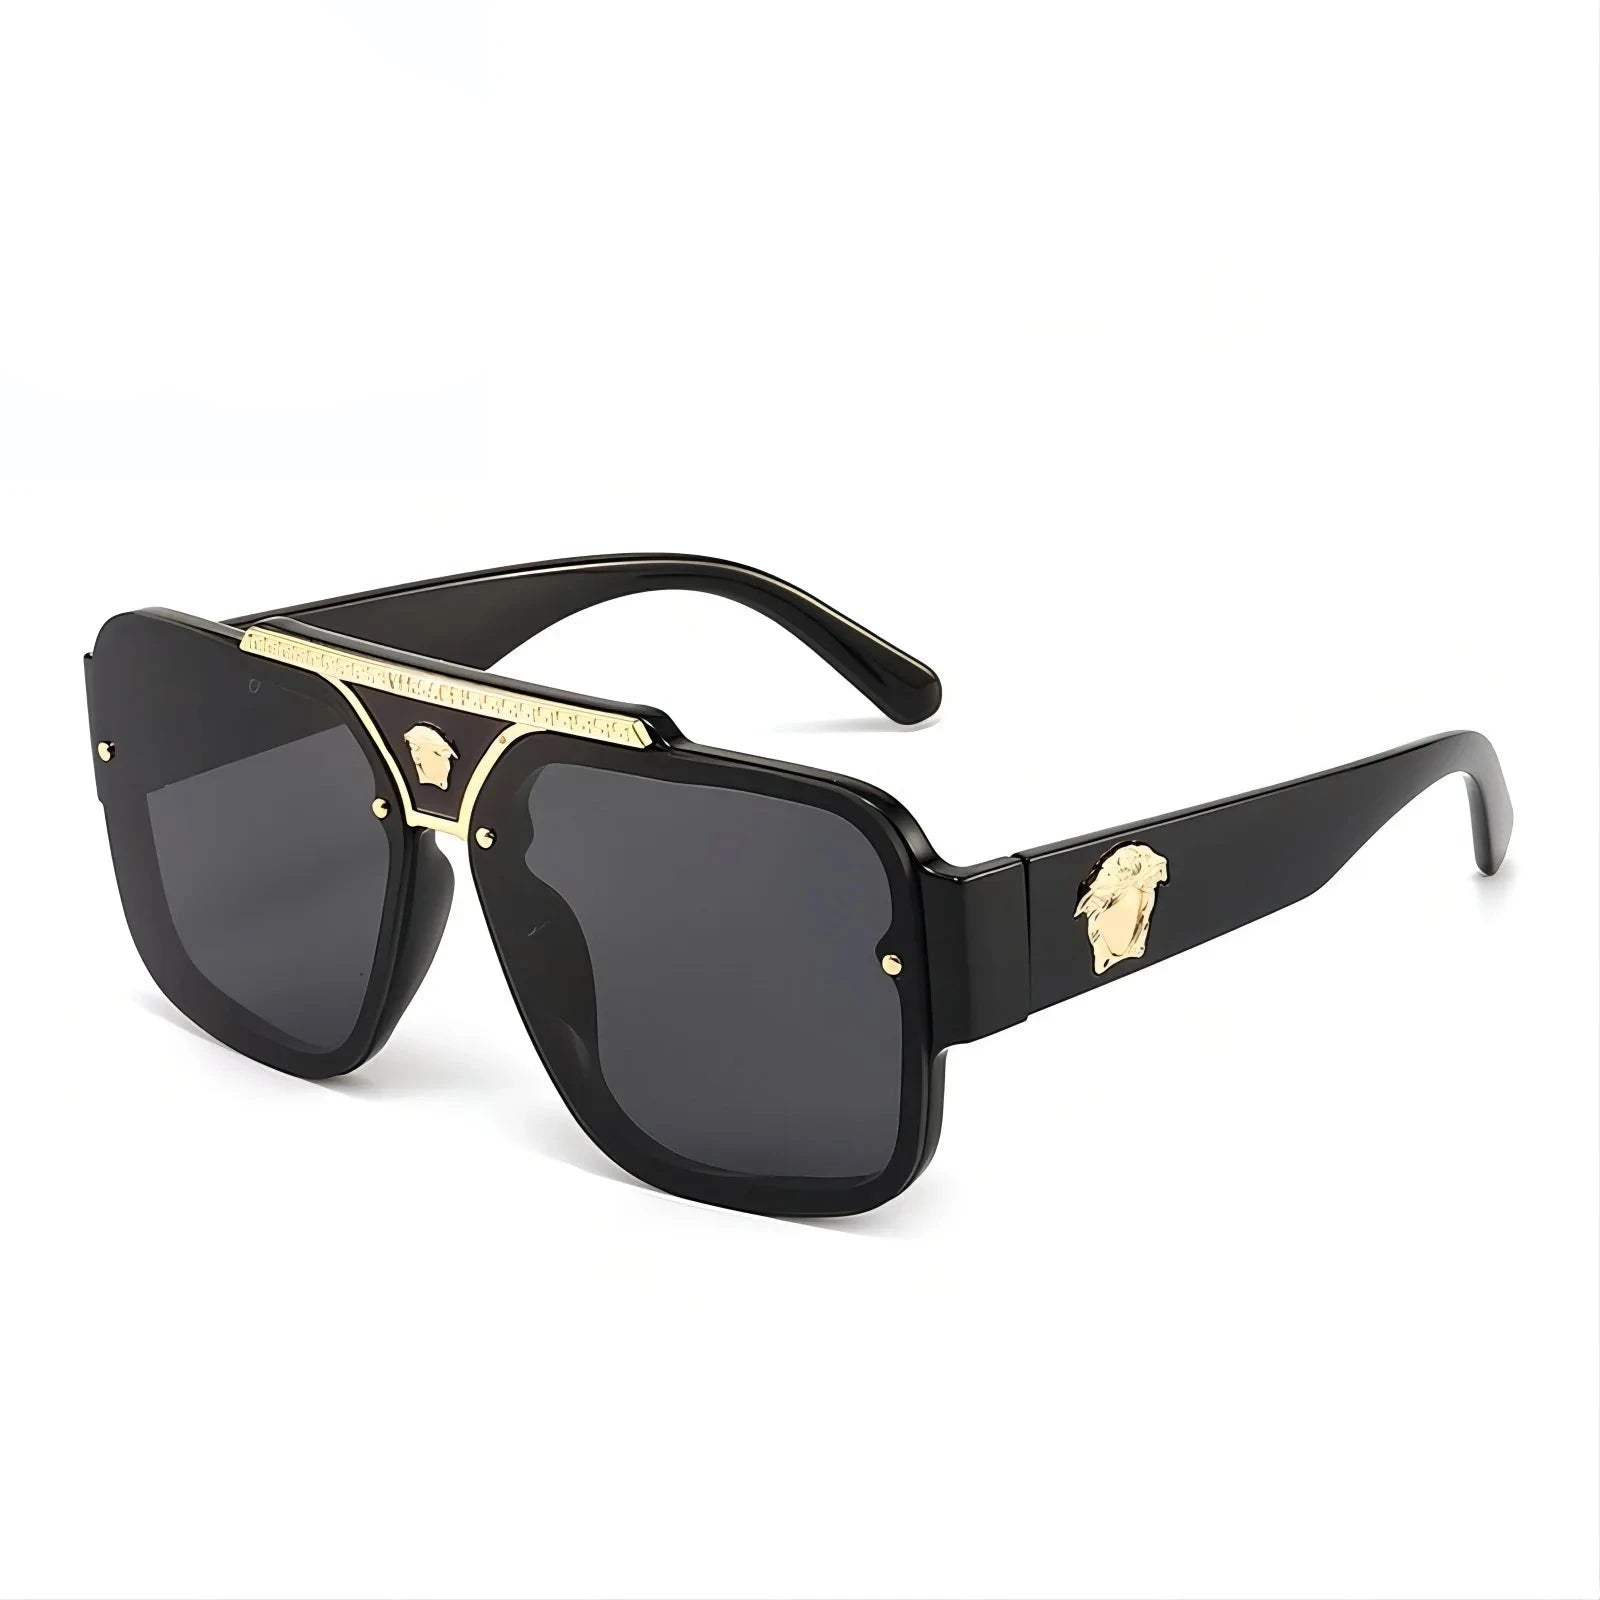 New Sunglasses Men and Women Personalized Cross-border Design - SAMFILS